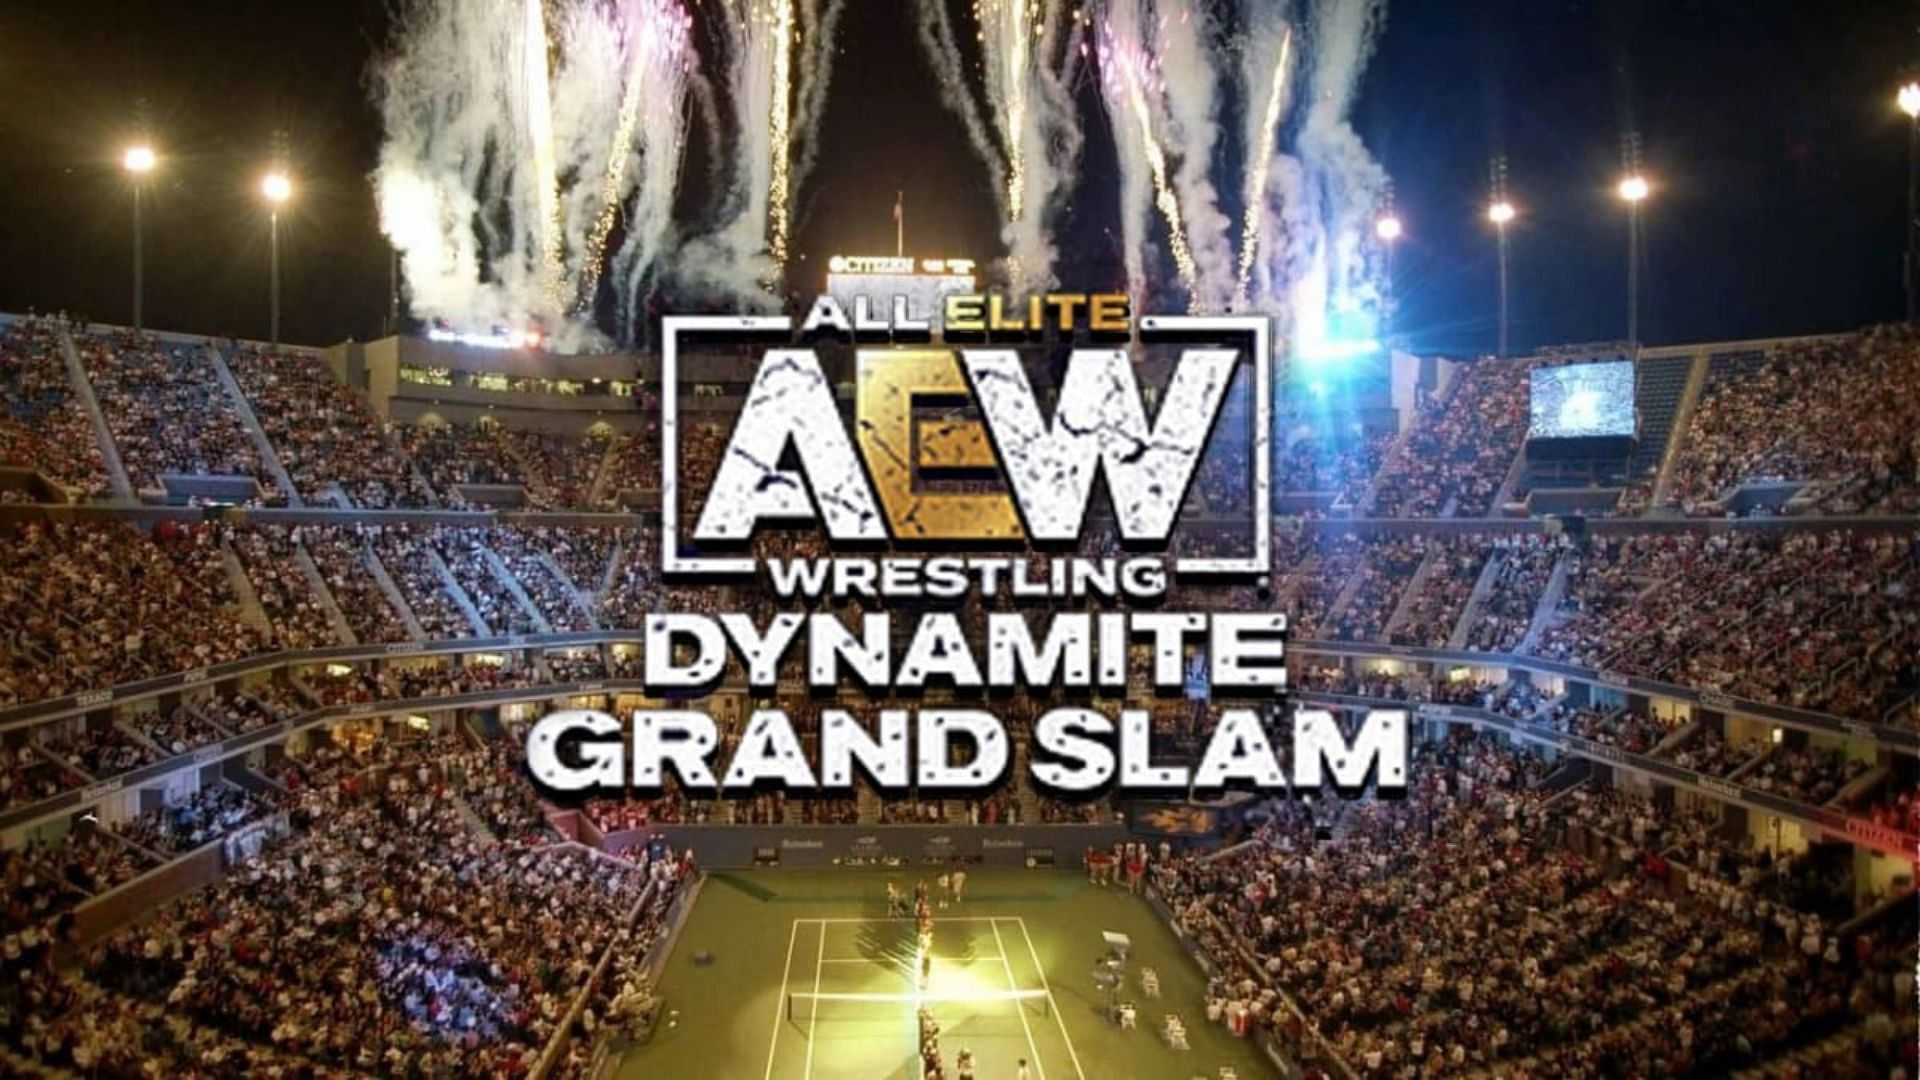 AEW Dynamite Grand Slam is set to host in the Arthur Ashe Stadium